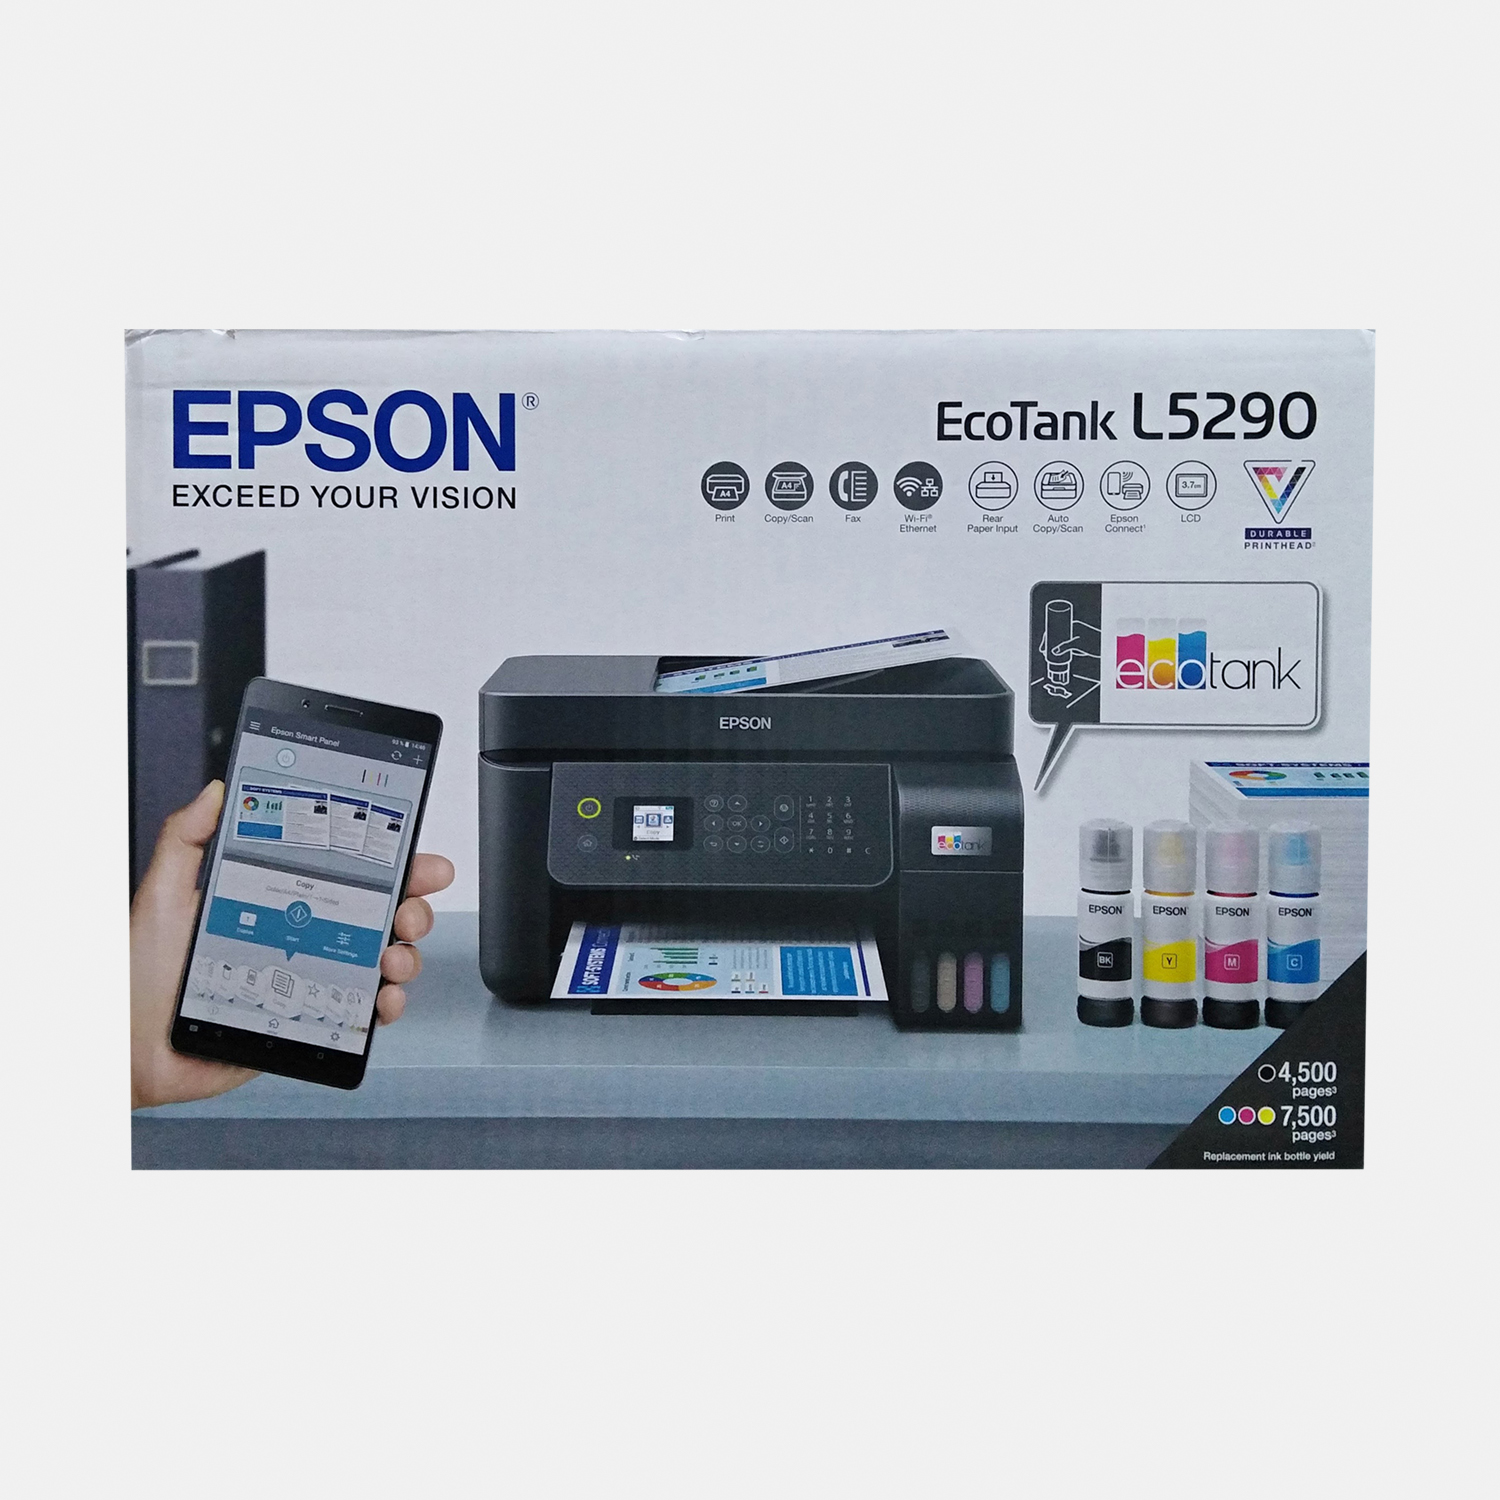 L5290 Epson Ecotank Multifuntion Wi Fi Printer With Fax Lazada Ph 9590